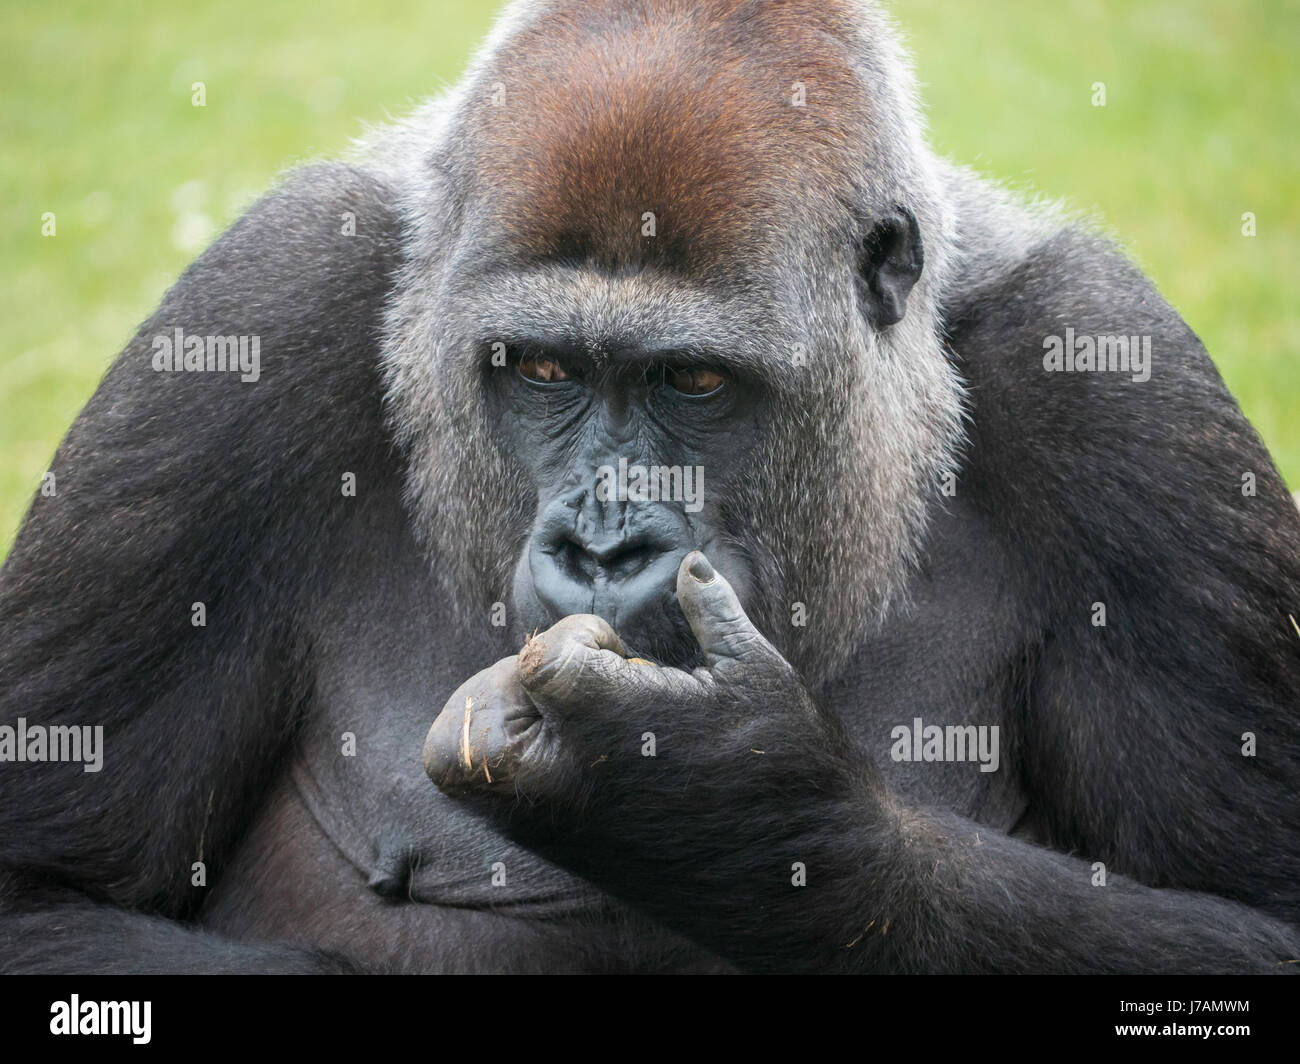 A Western Lowland gorilla at Blackpool Zoo, England Stock Photo